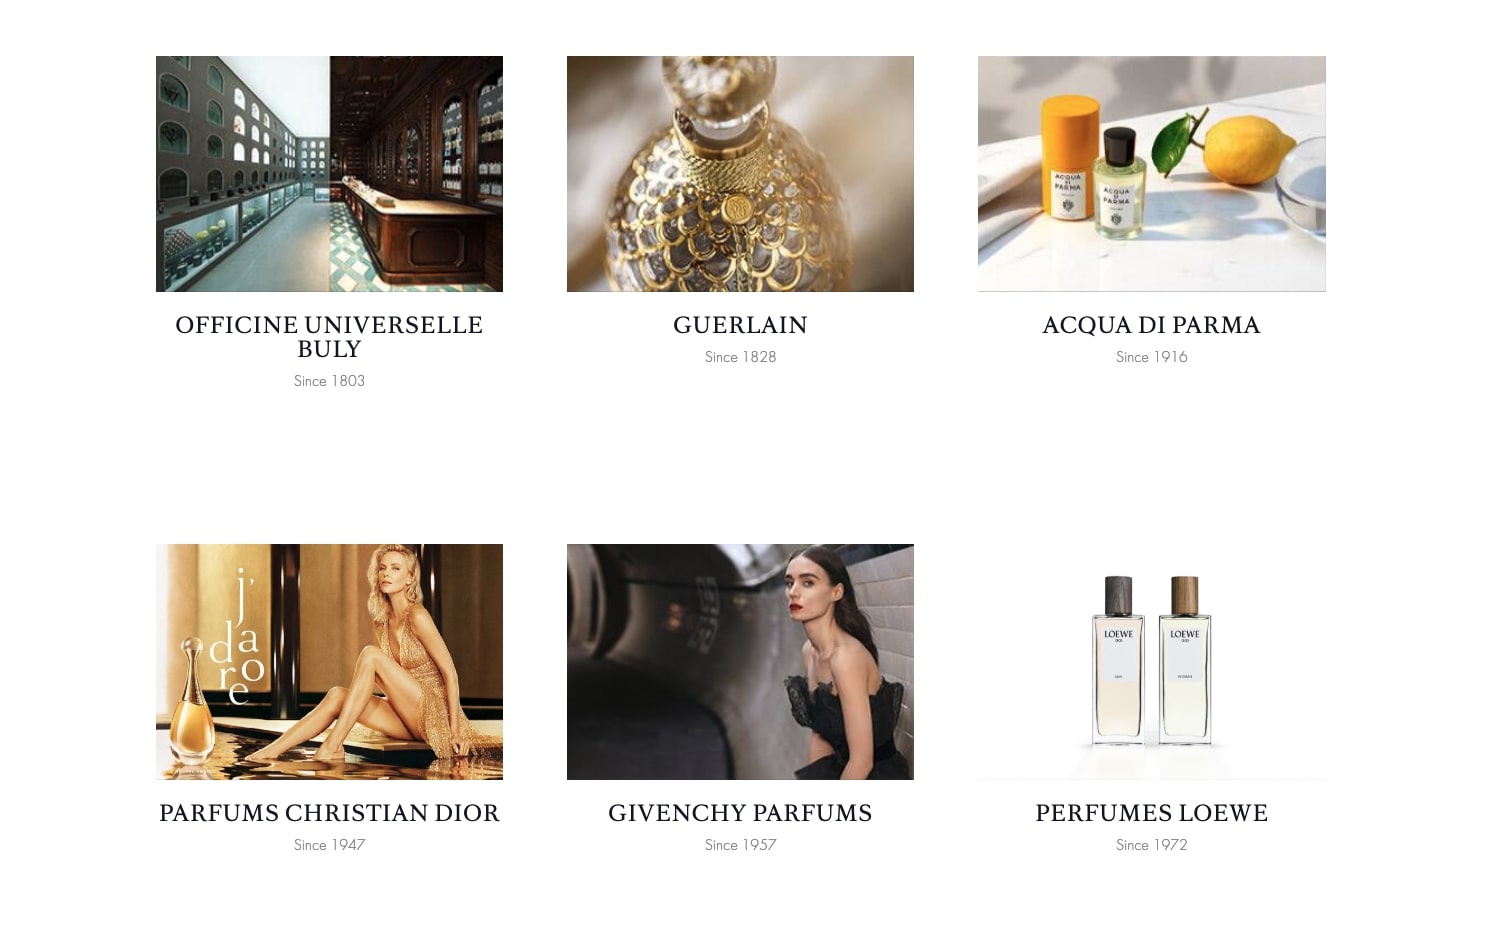 Perfumes & Cosmetics - LVMH